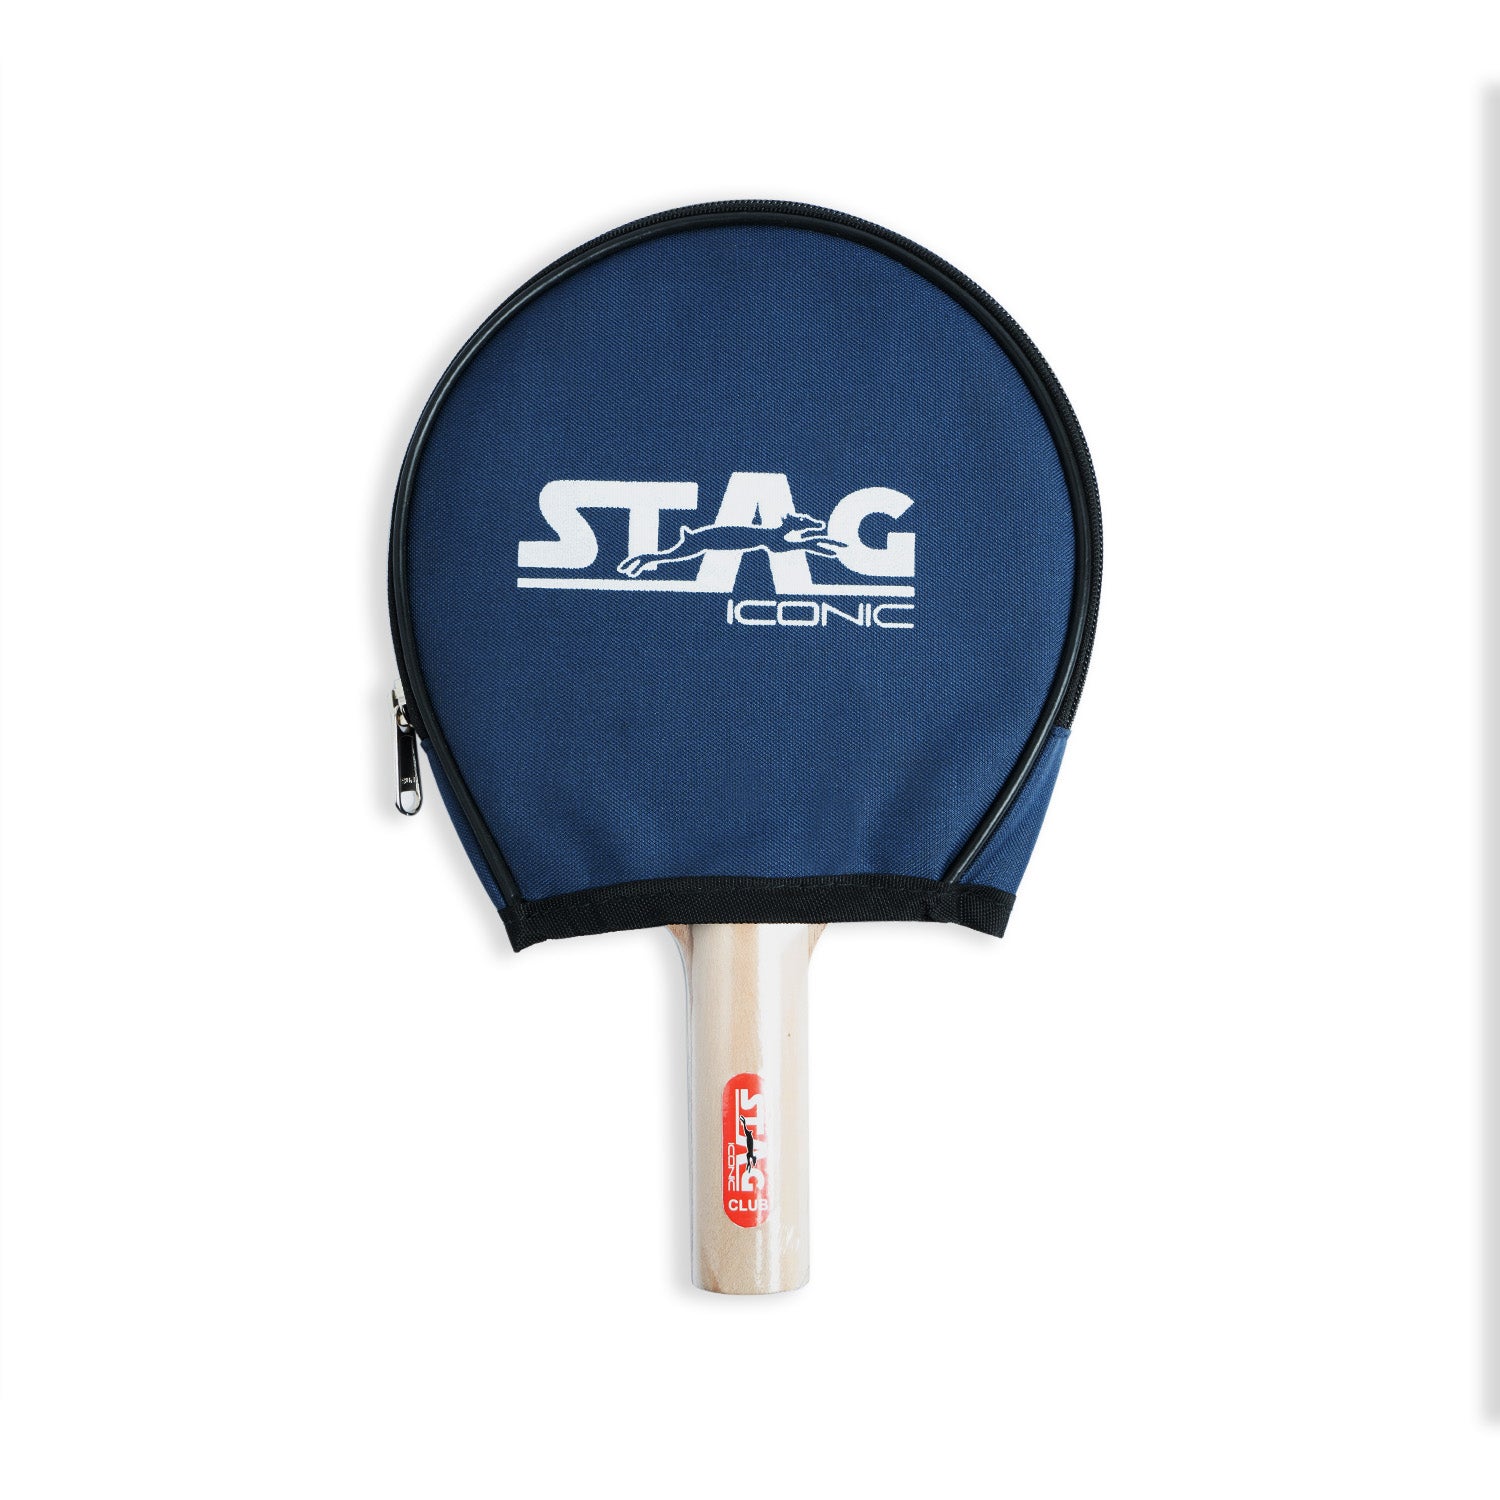 Stag Club Table Tennis Racquet